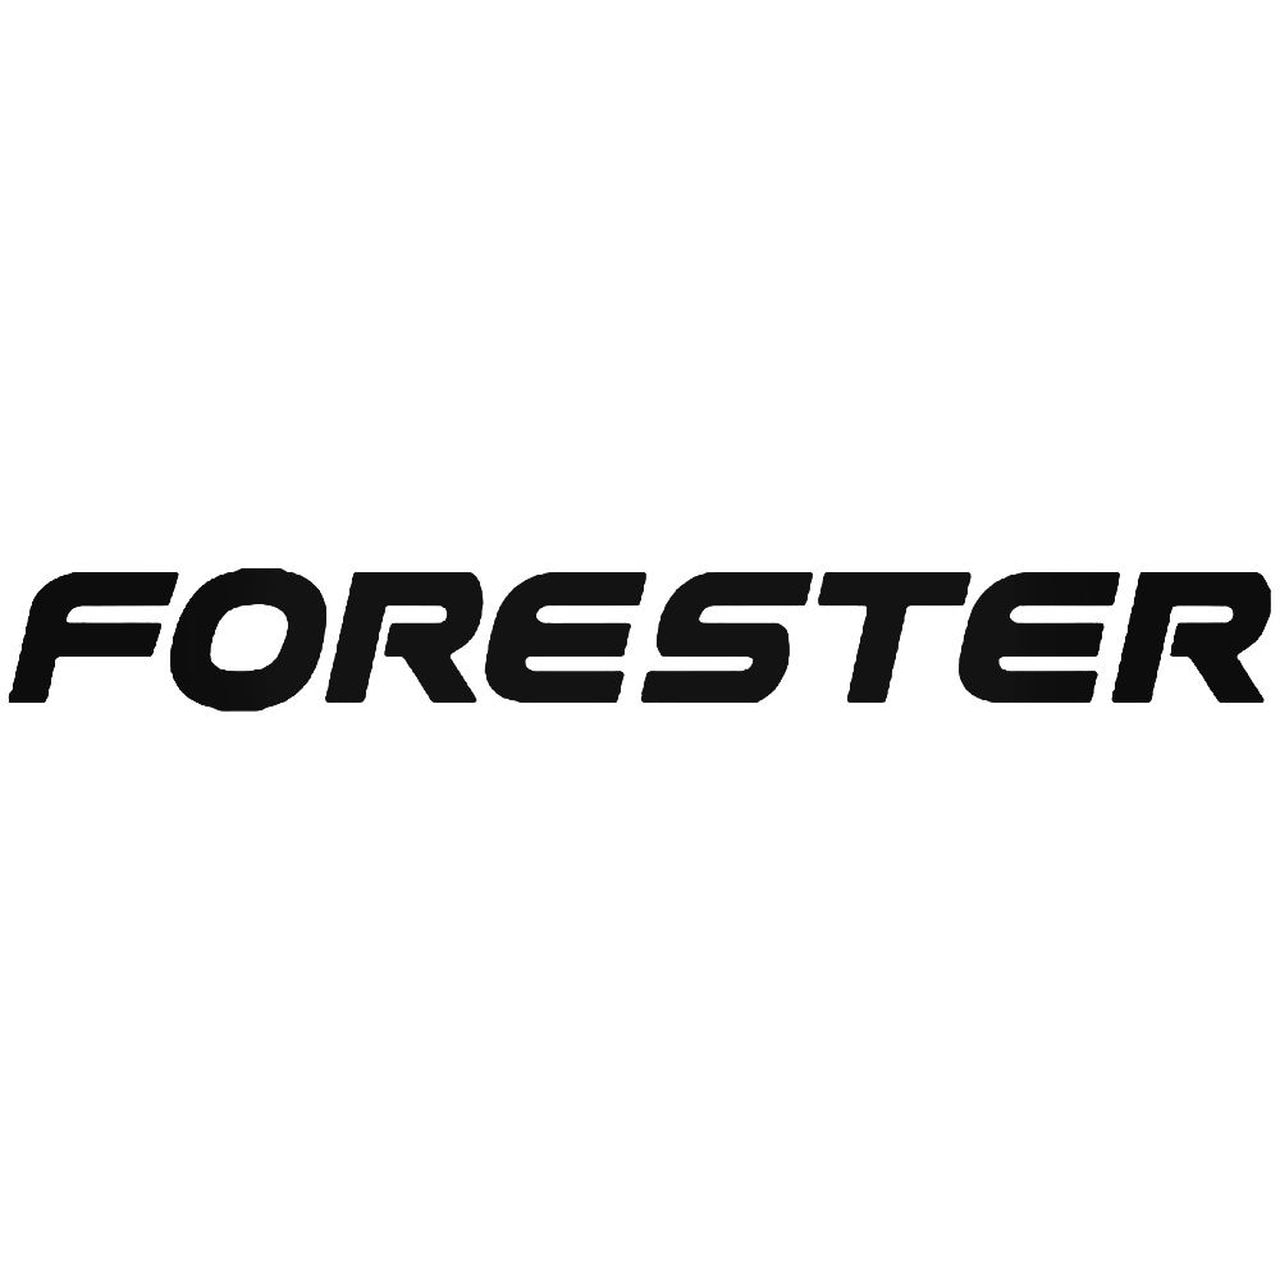 Forester Logo - Subaru Forester Vinyl Decal Sticker